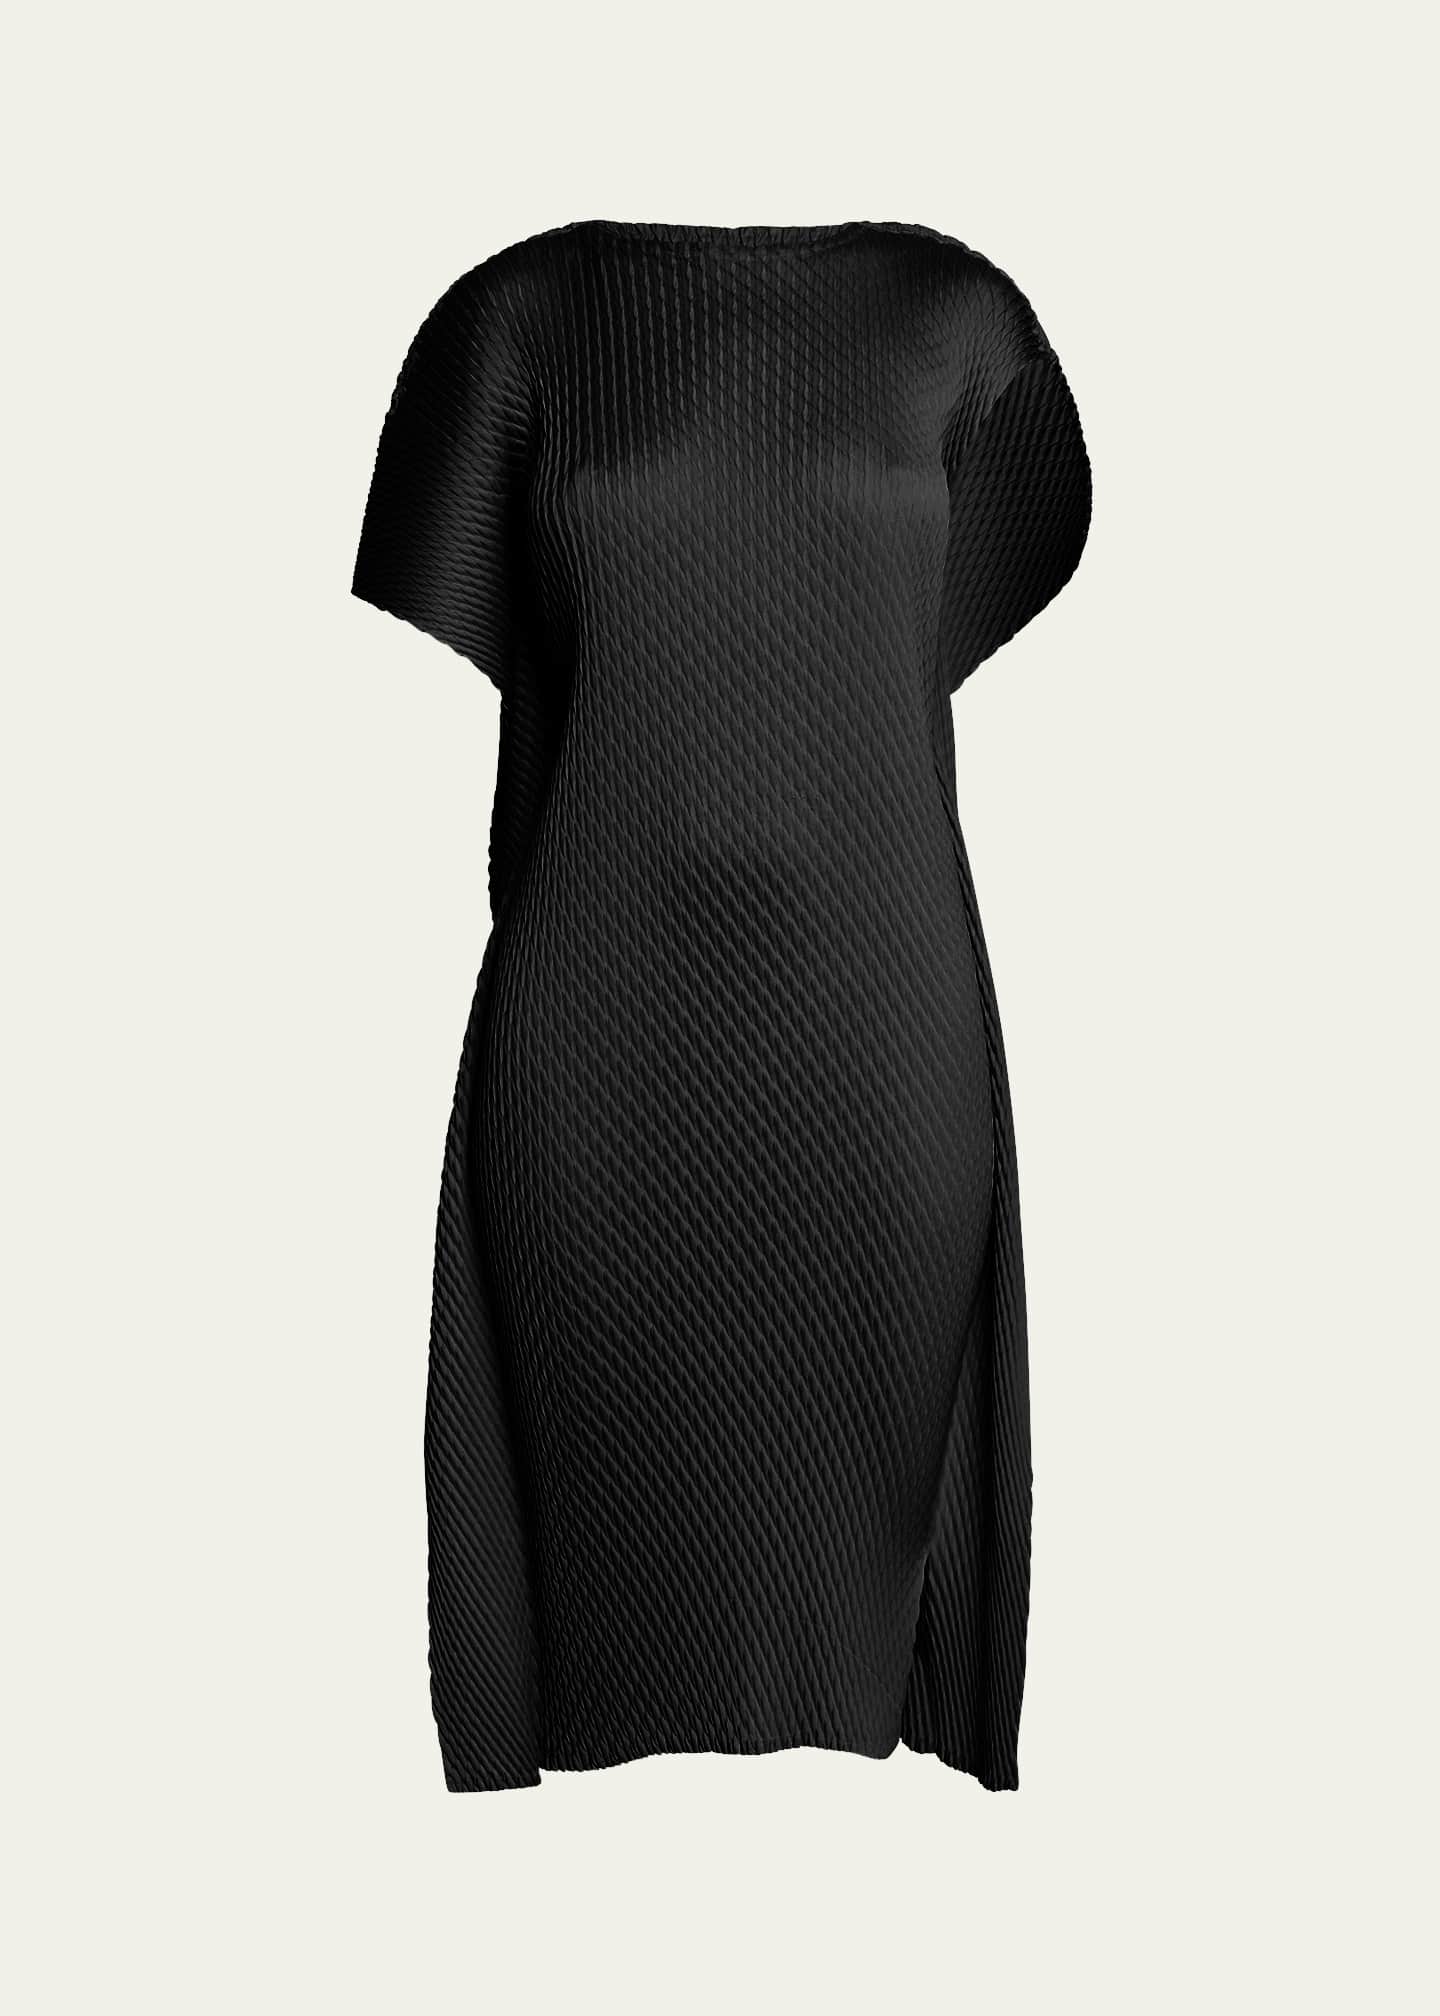 Issey Miyake Sleek Pleats Fold-Over Midi Dress Image 1 of 5